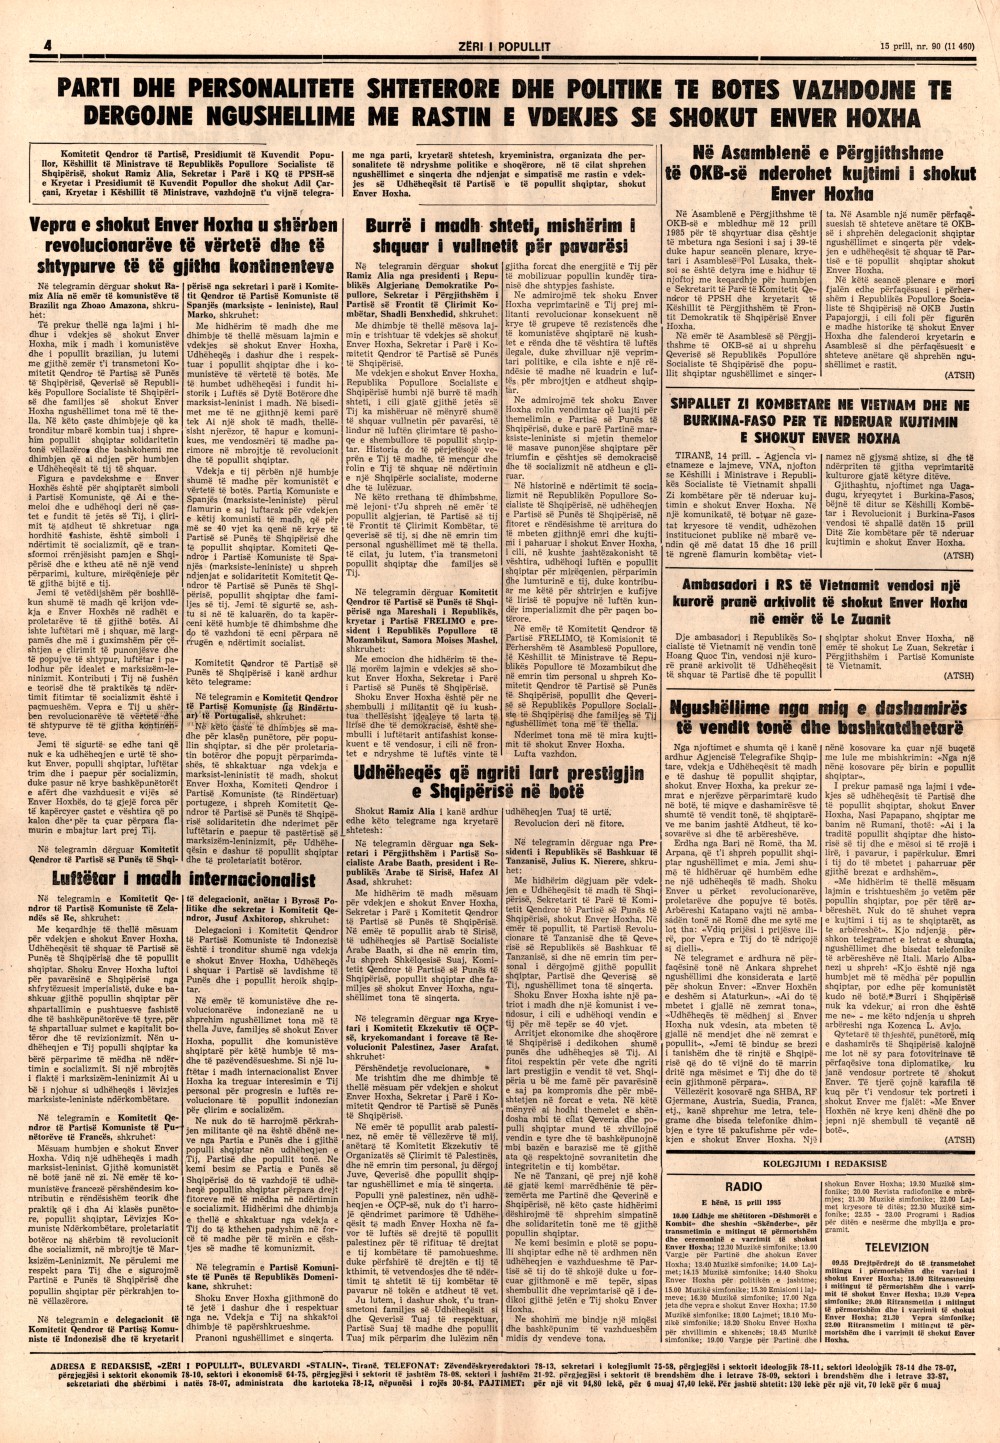 Газета "Зери и популлит" от 15 апреля 1985 года (четвертая полоса)